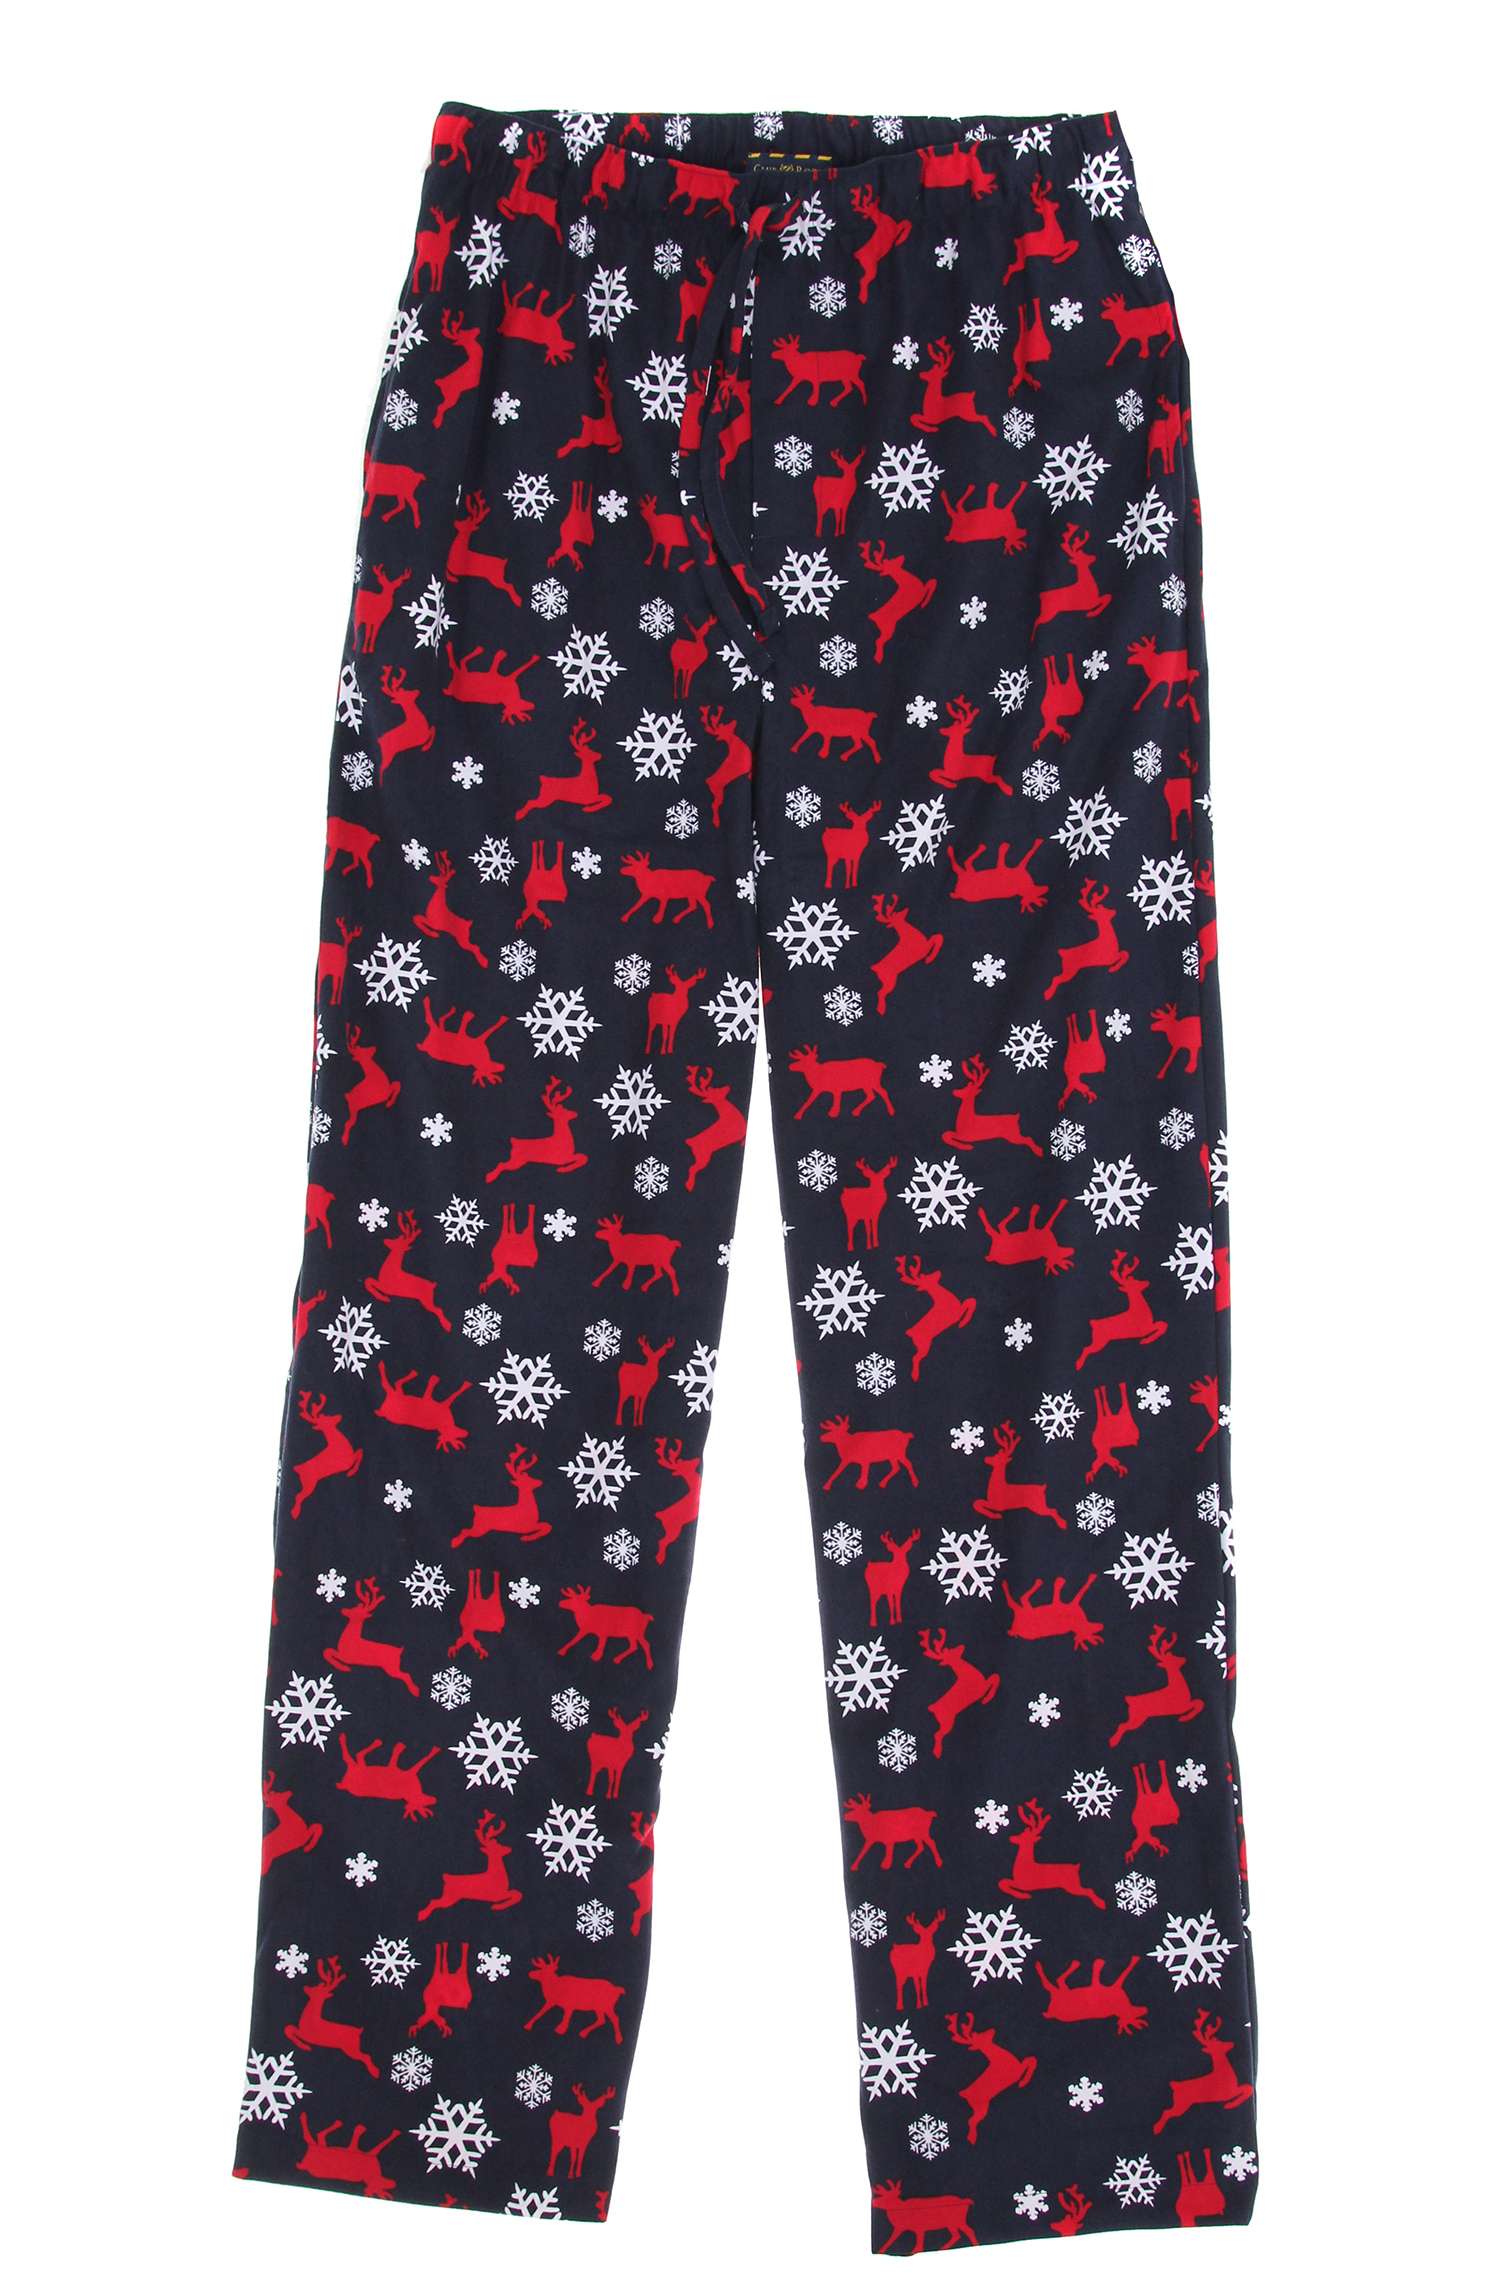 Club Room Men's Novelty Print Pajama Pants | eBay